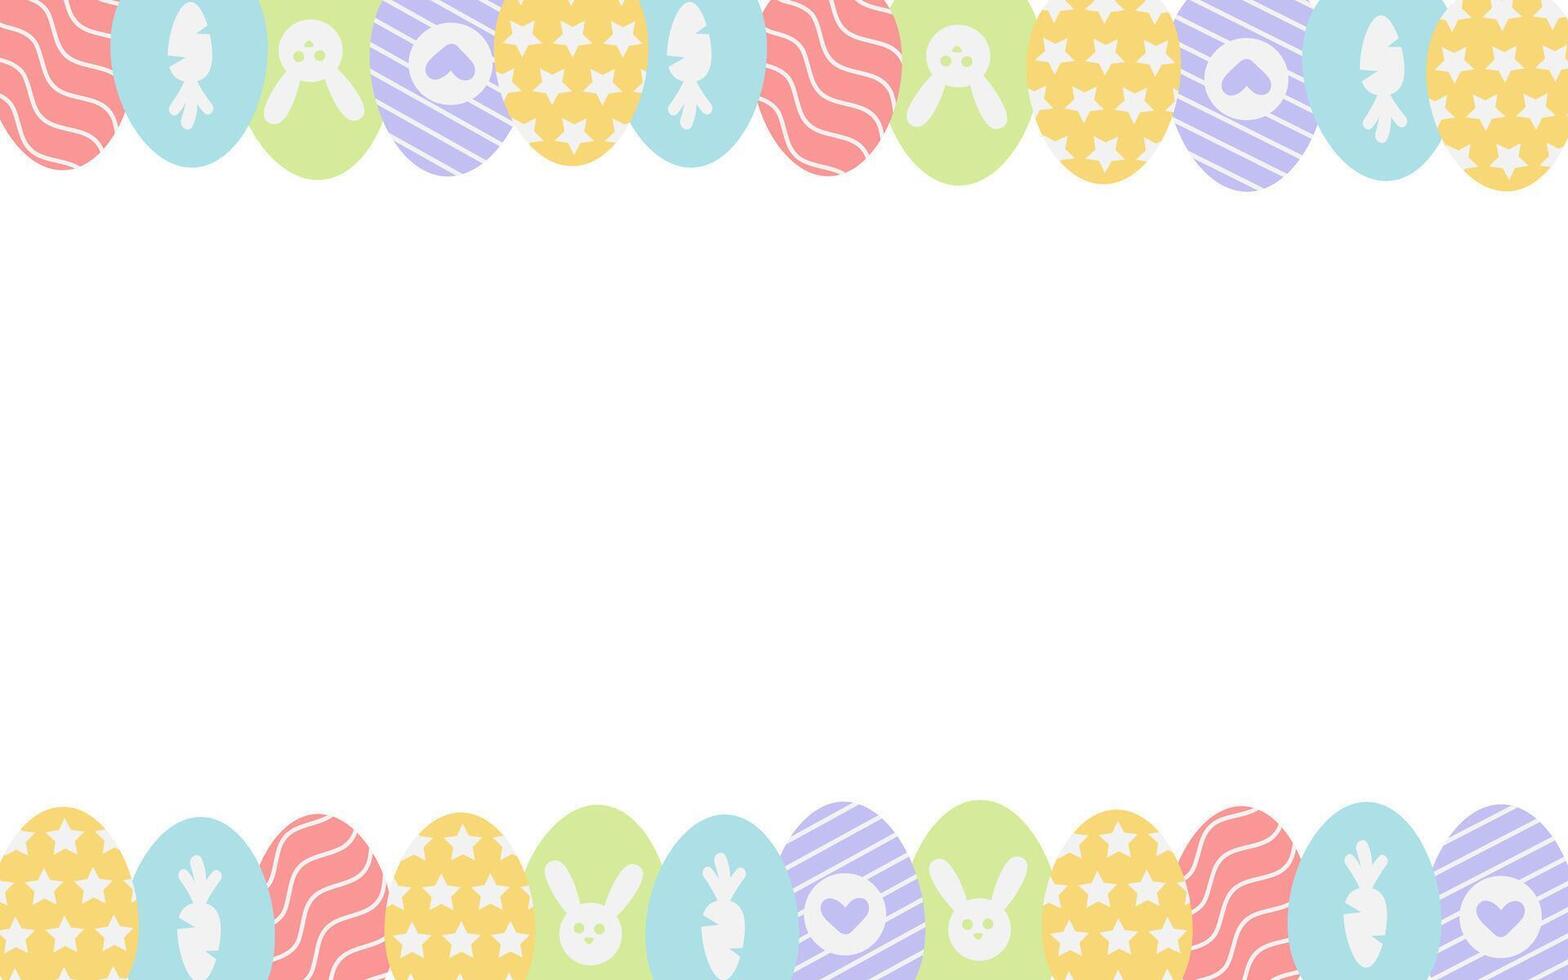 feliz Páscoa cumprimento cartão com colorida ovos dentro pastel cores para bandeiras, para Casamento convites e para Parabéns em Primavera e Páscoa vetor